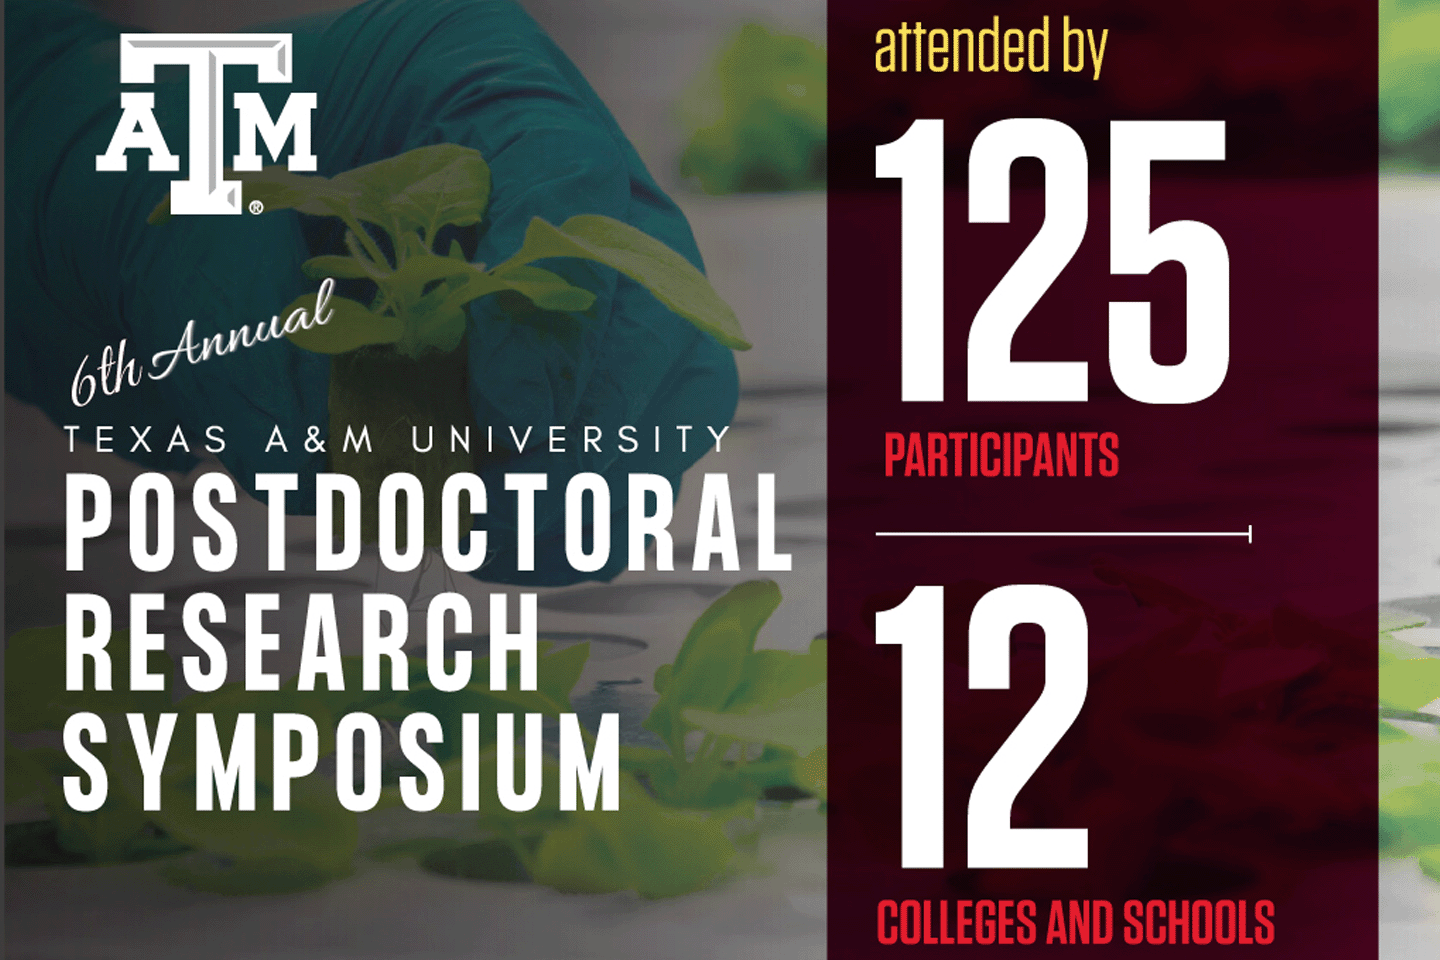 Texas A&M postdoctoral research symposium awards